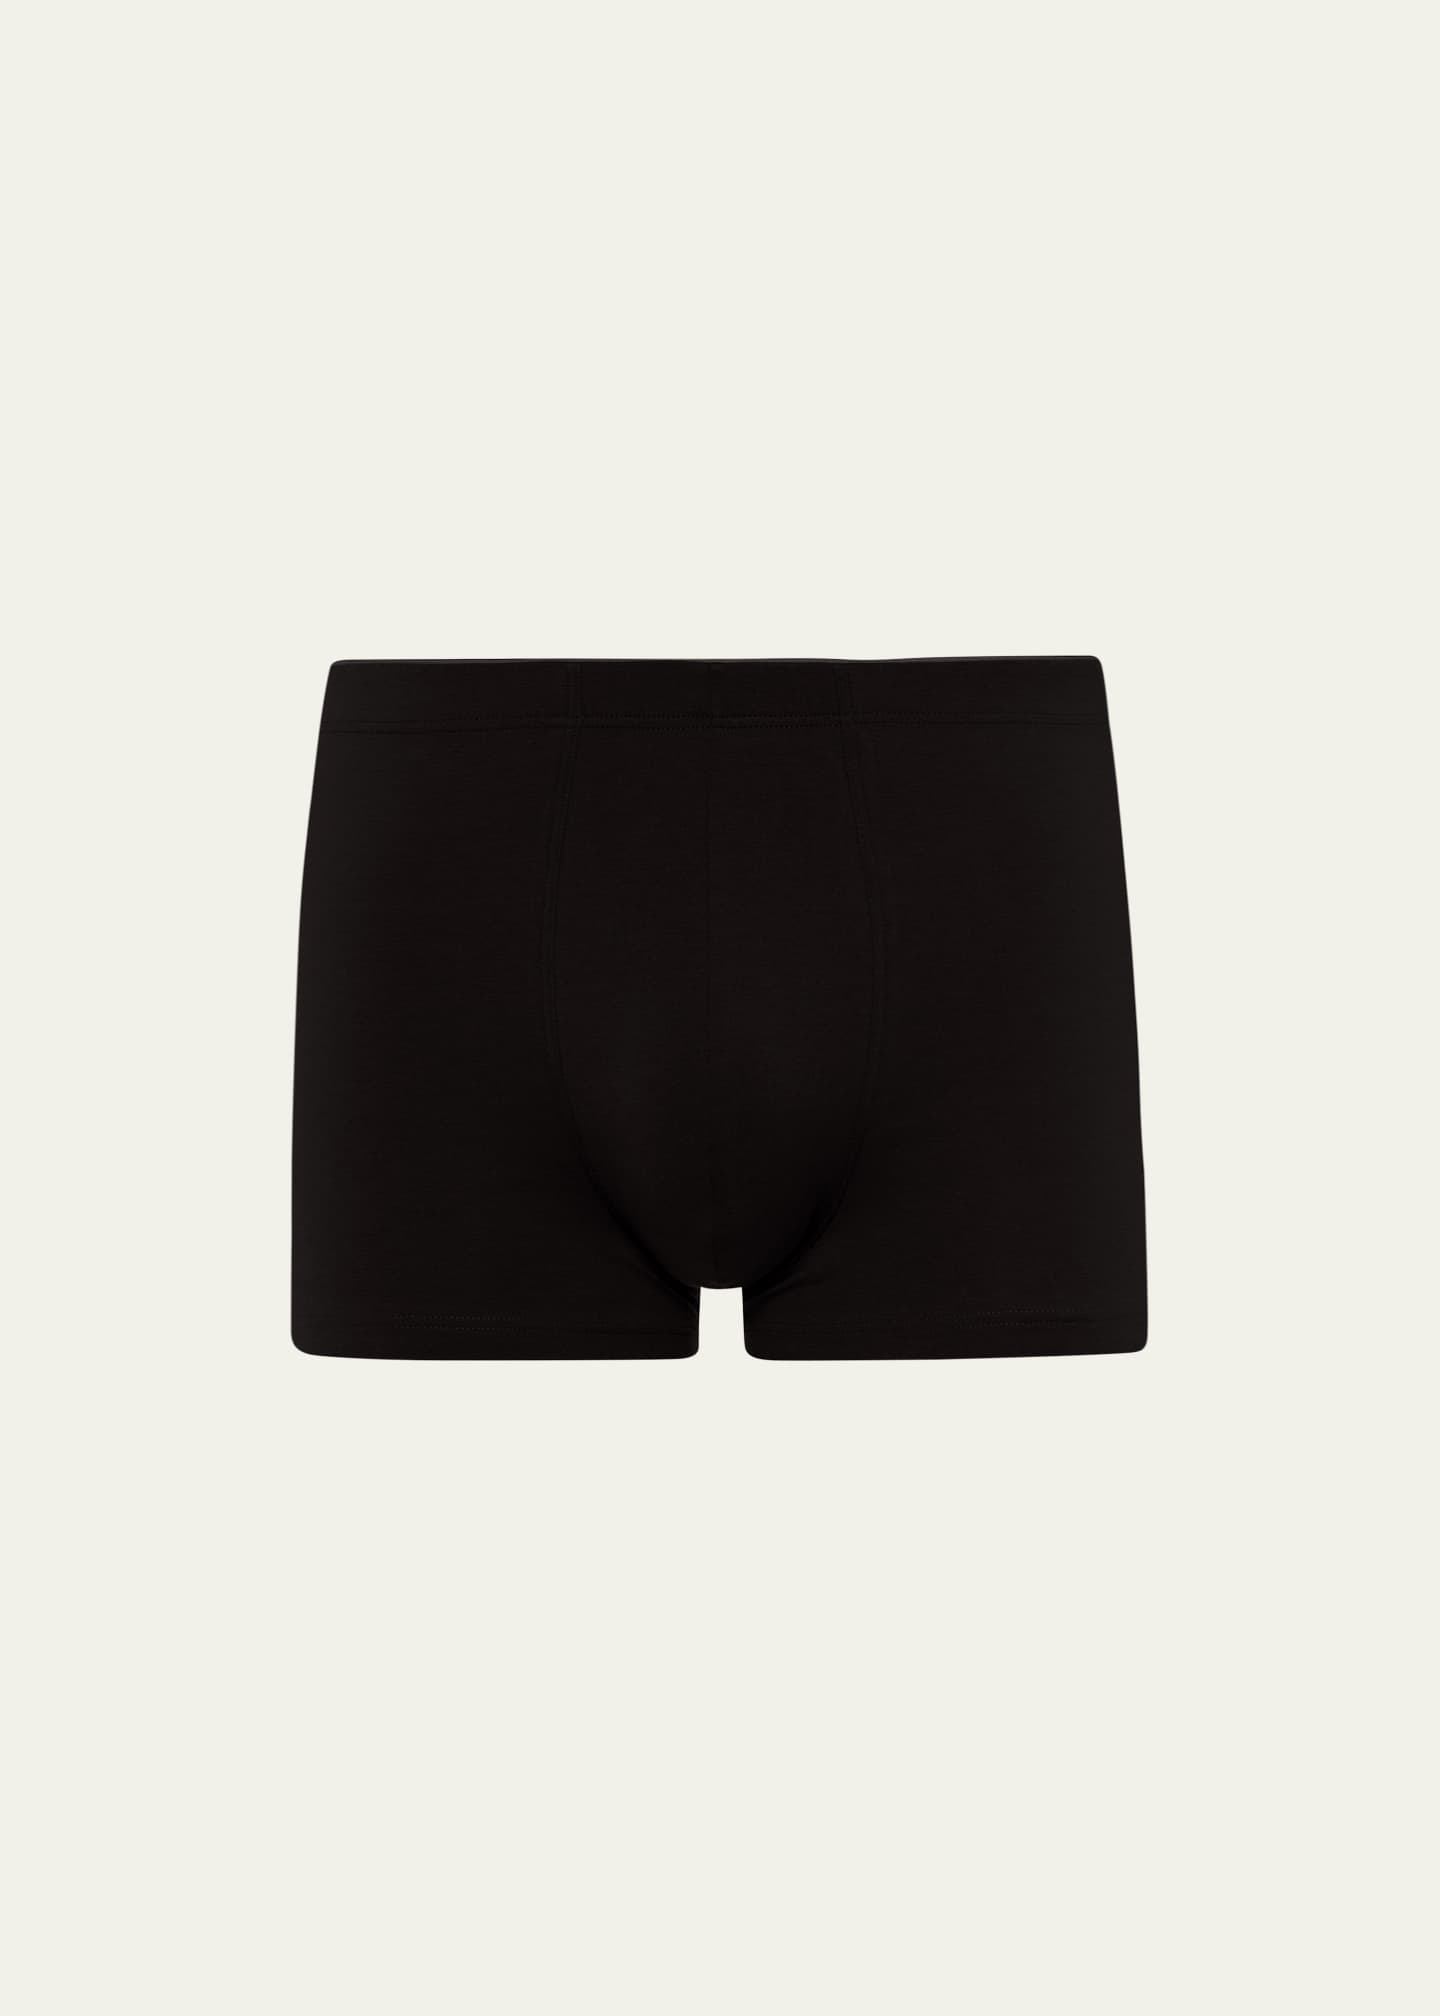 Hanro Men's Clothing : Underwear & Boxers at Neiman Marcus